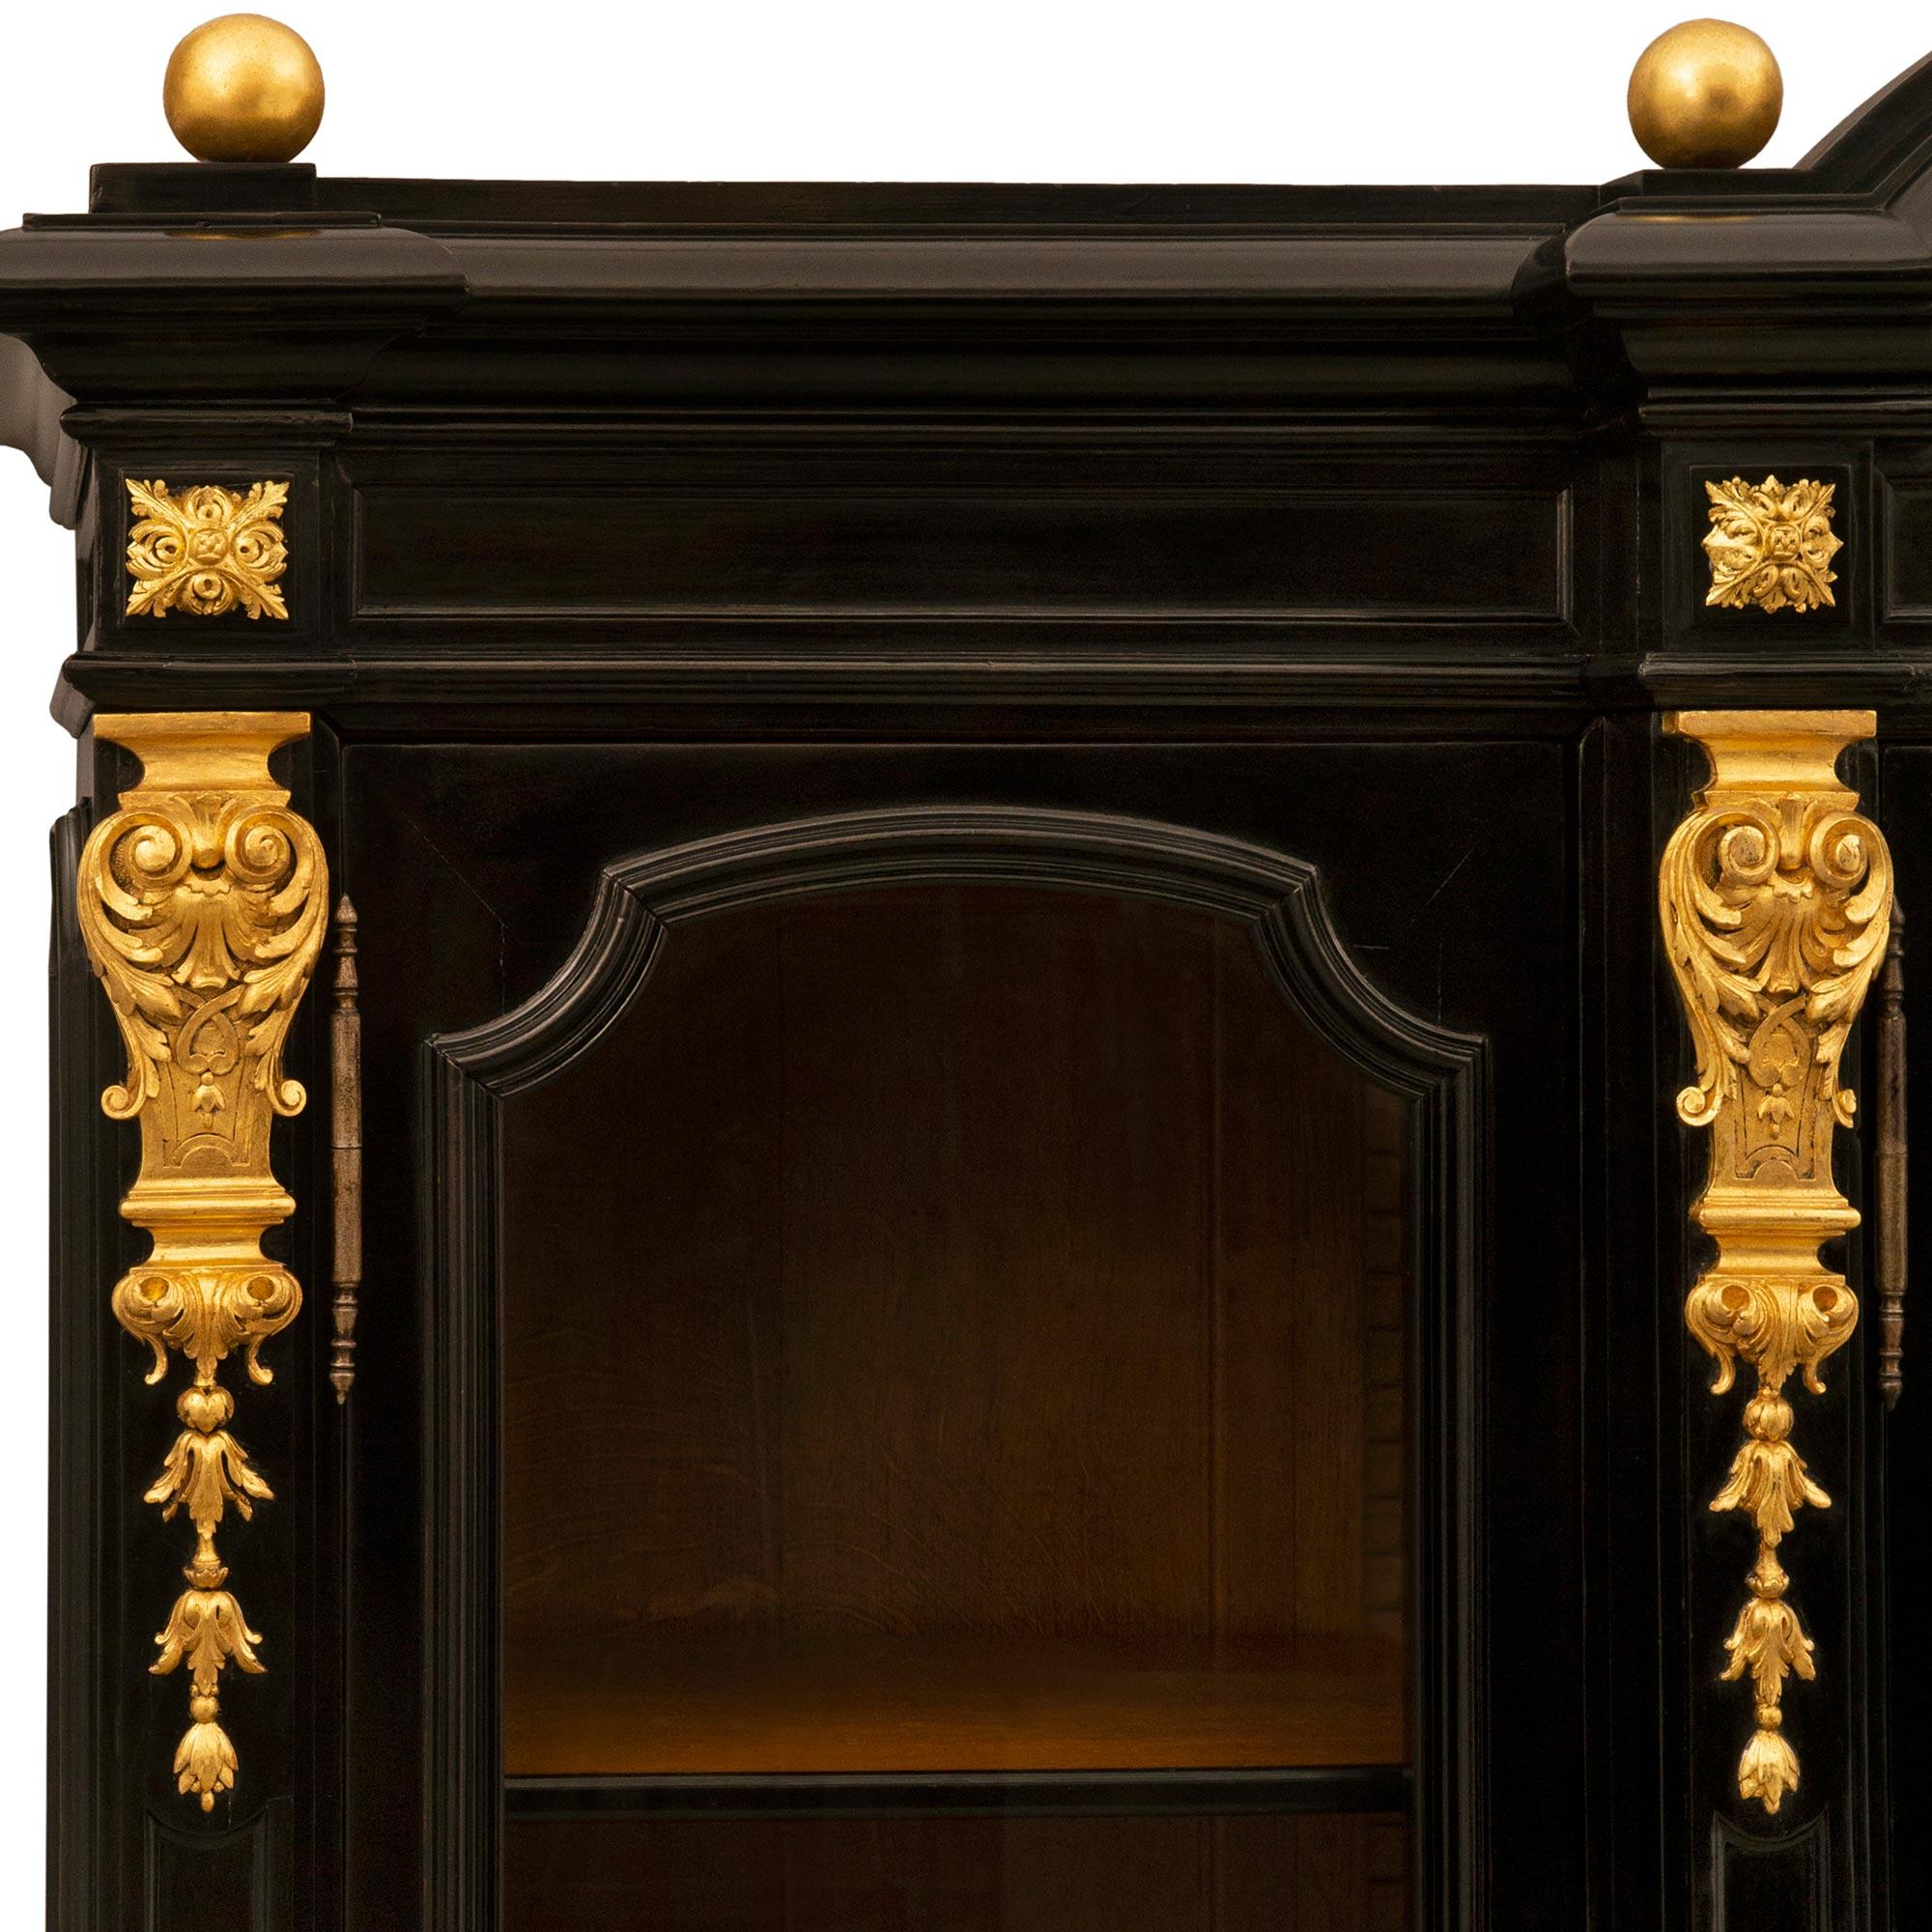 An Italian 19th century Rococo Revival st. ebonized giltwood vitrine For Sale 2